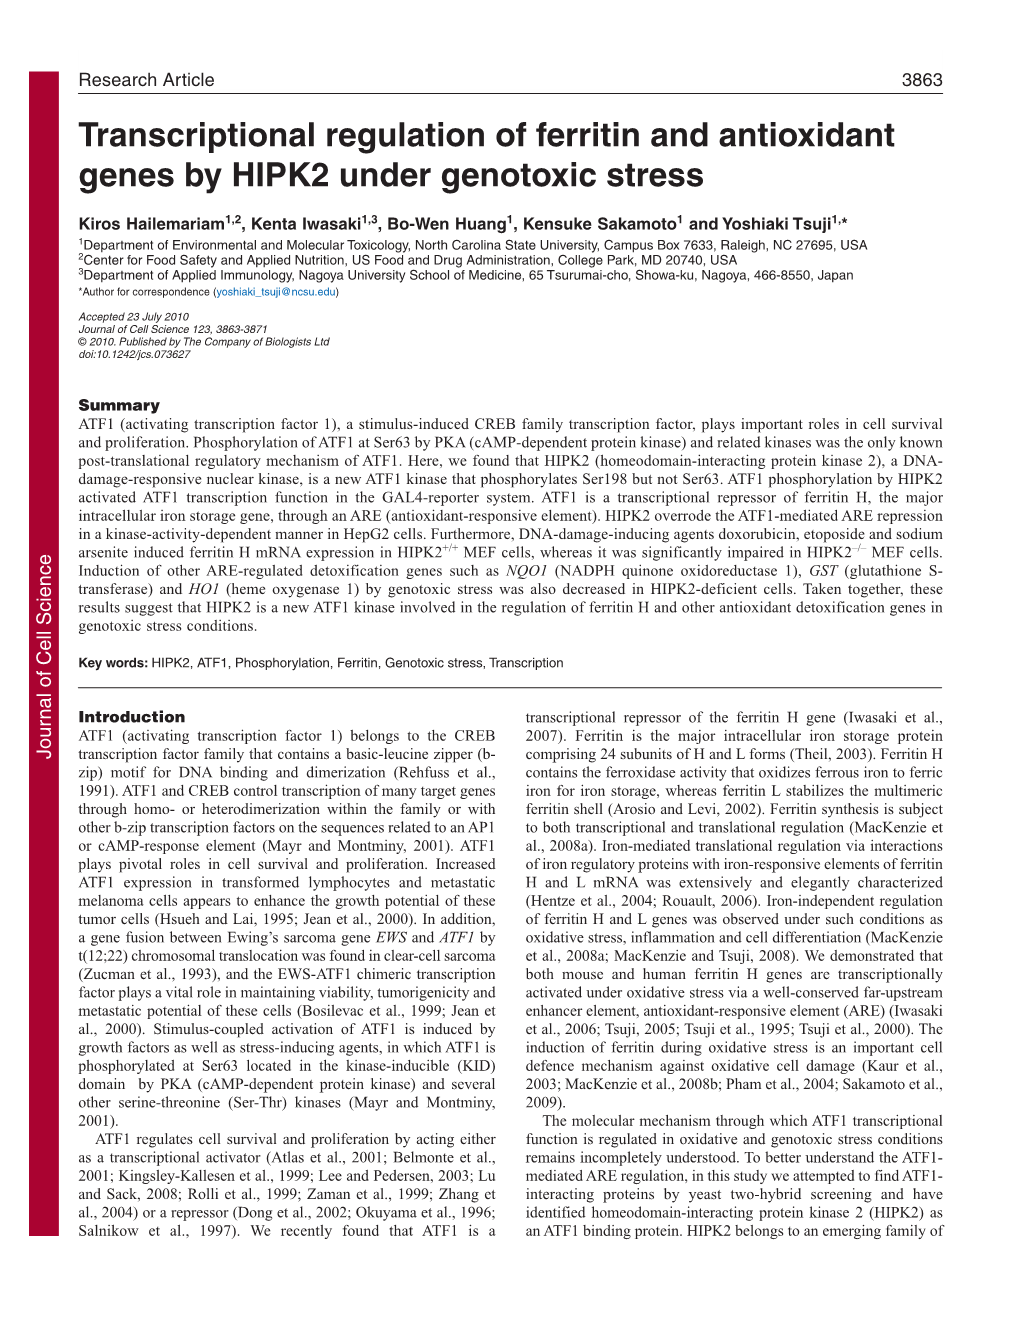 Transcriptional Regulation of Ferritin and Antioxidant Genes by HIPK2 Under Genotoxic Stress